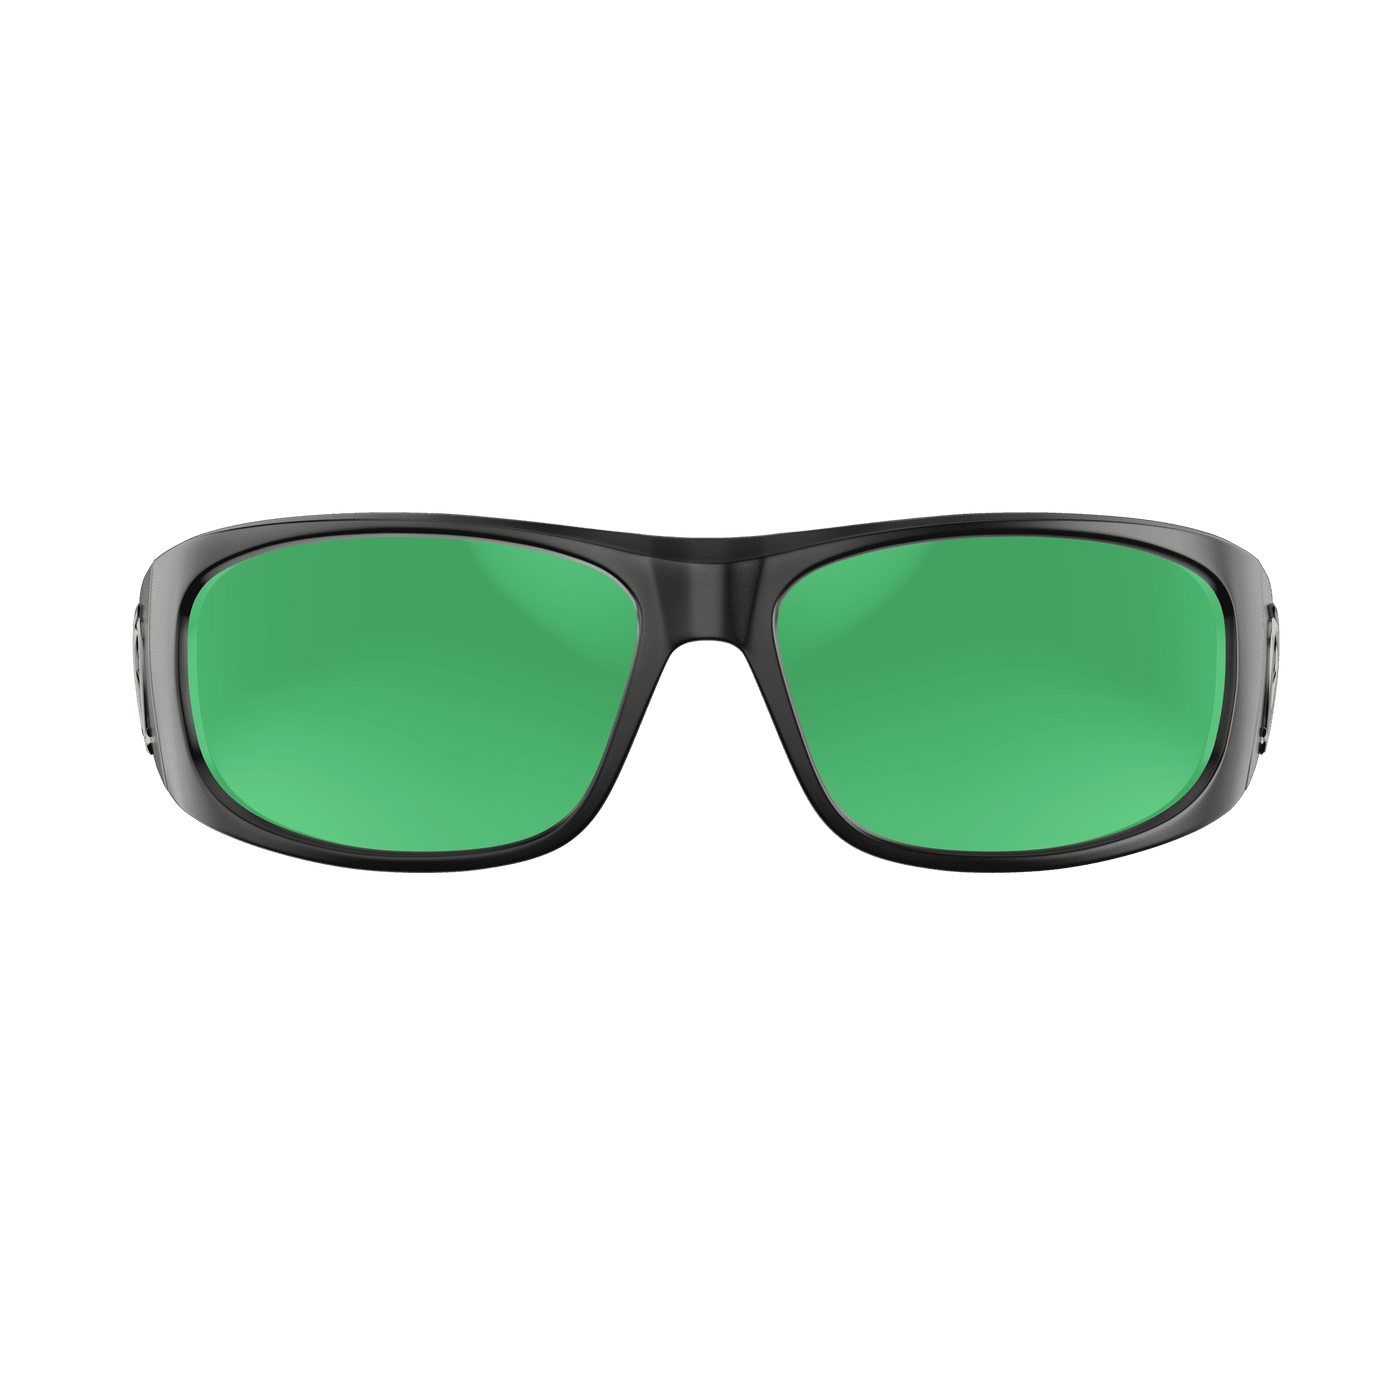 Redtail Republic Sunglasses Accessories Redtail Republic Laguna Matte Black Green Mirror